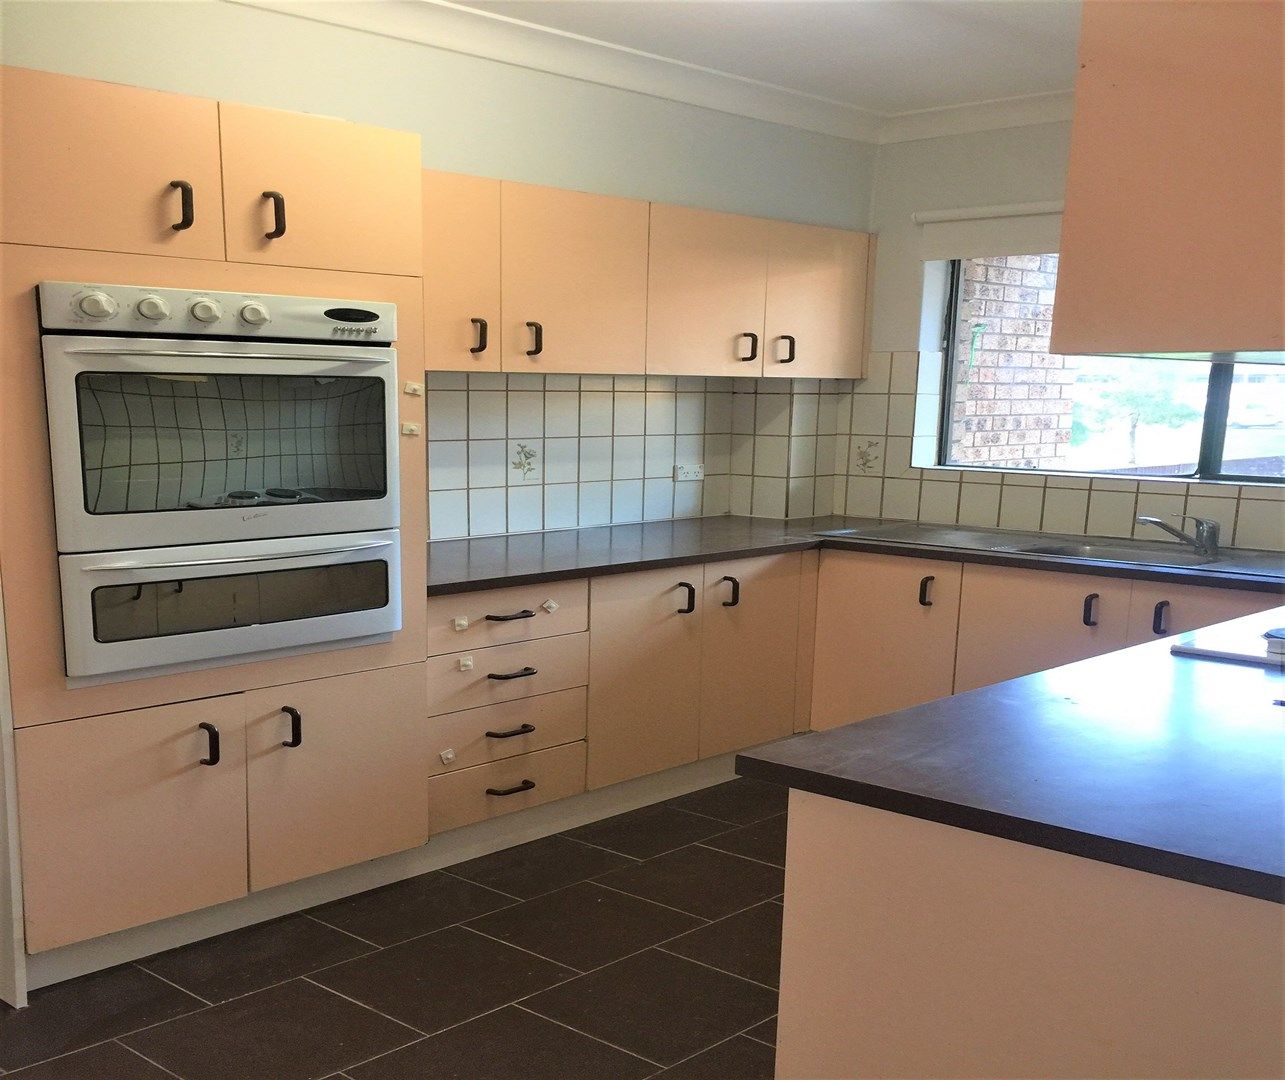 2 bedrooms Apartment / Unit / Flat in 12/28 Hythe Street MOUNT DRUITT NSW, 2770